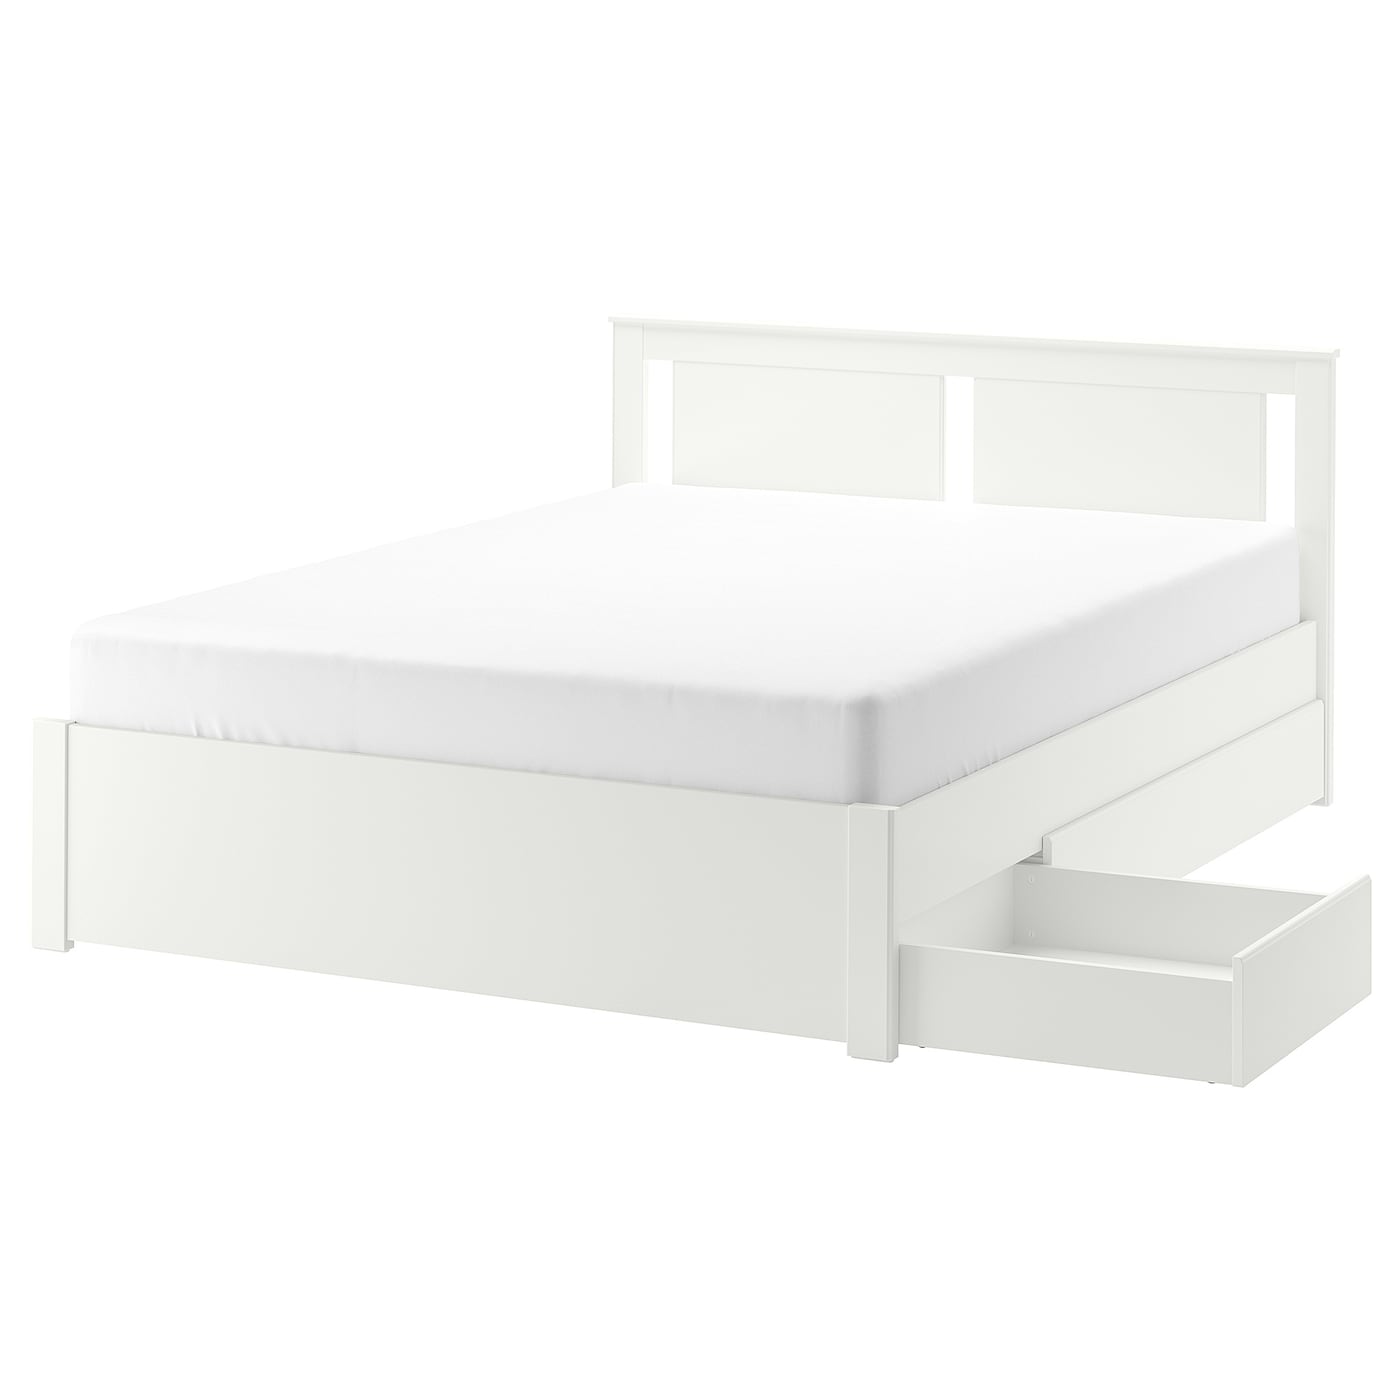 Каркас кровати с 2 ящиками для хранения - IKEA SONGESAND/LÖNSET/LONSET, 200х140 см, белый, СОНГЕСАНД/ЛОНСЕТ ИКЕА